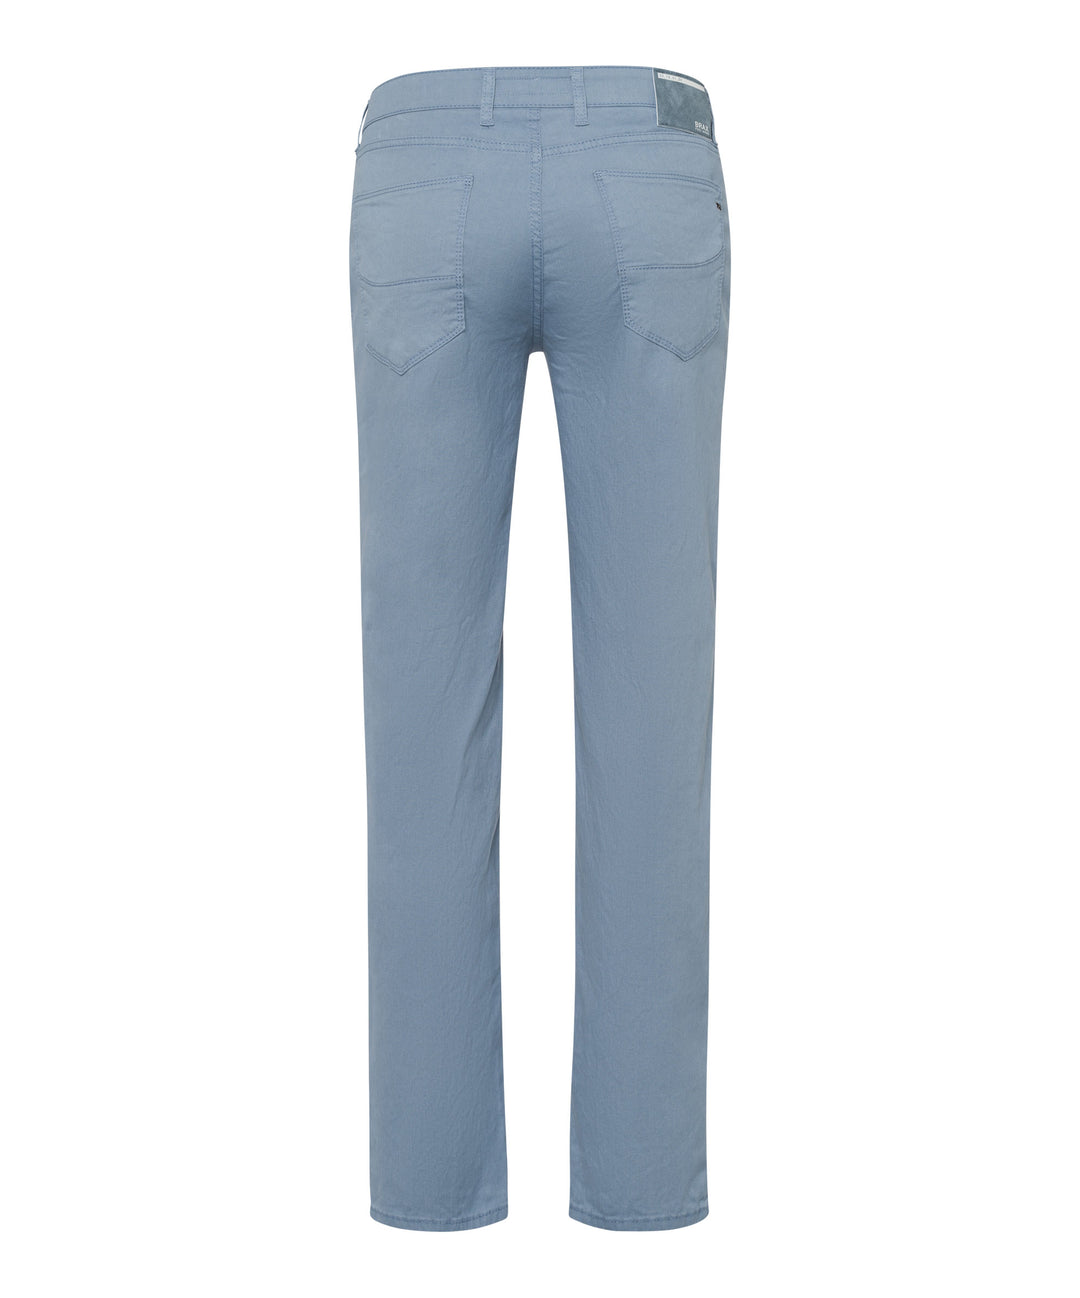 84-2508 Cadiz Hi-Flex Cotton Linen Five Pocket in Dusty Blue